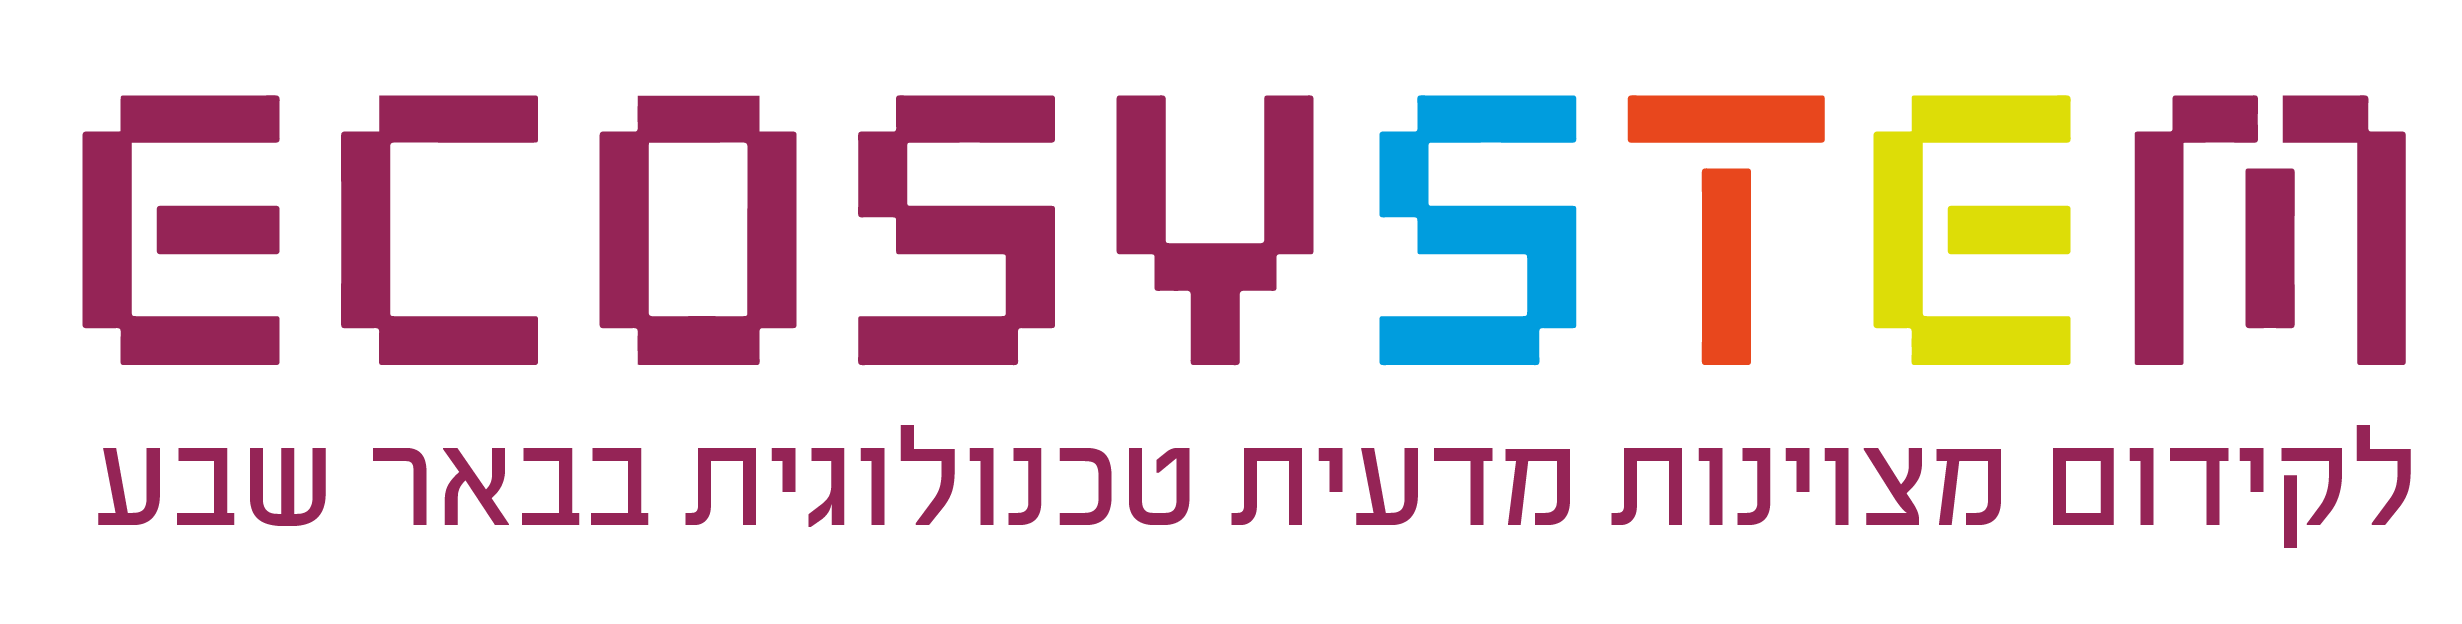 Be’er Sheva STEM Ecosystem logo